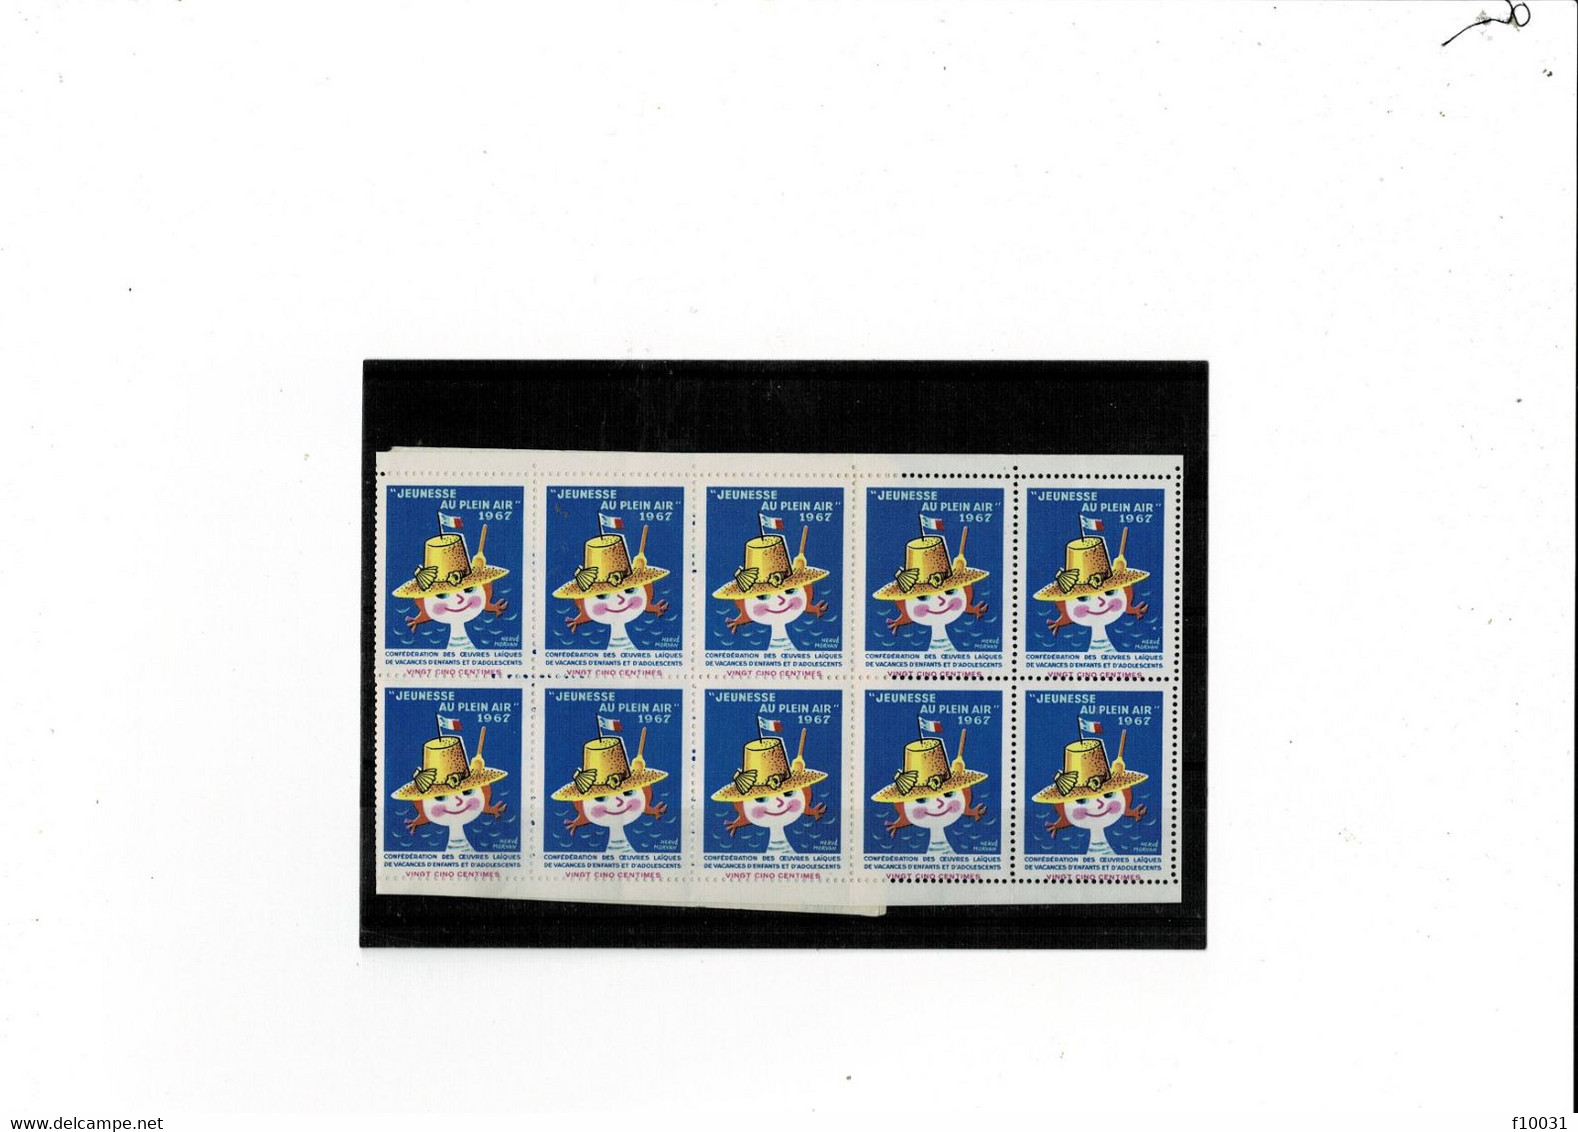 JEUNESSE AU PLEIN AIR CARNET DE 10 Timbres 1967 - Blokken & Postzegelboekjes